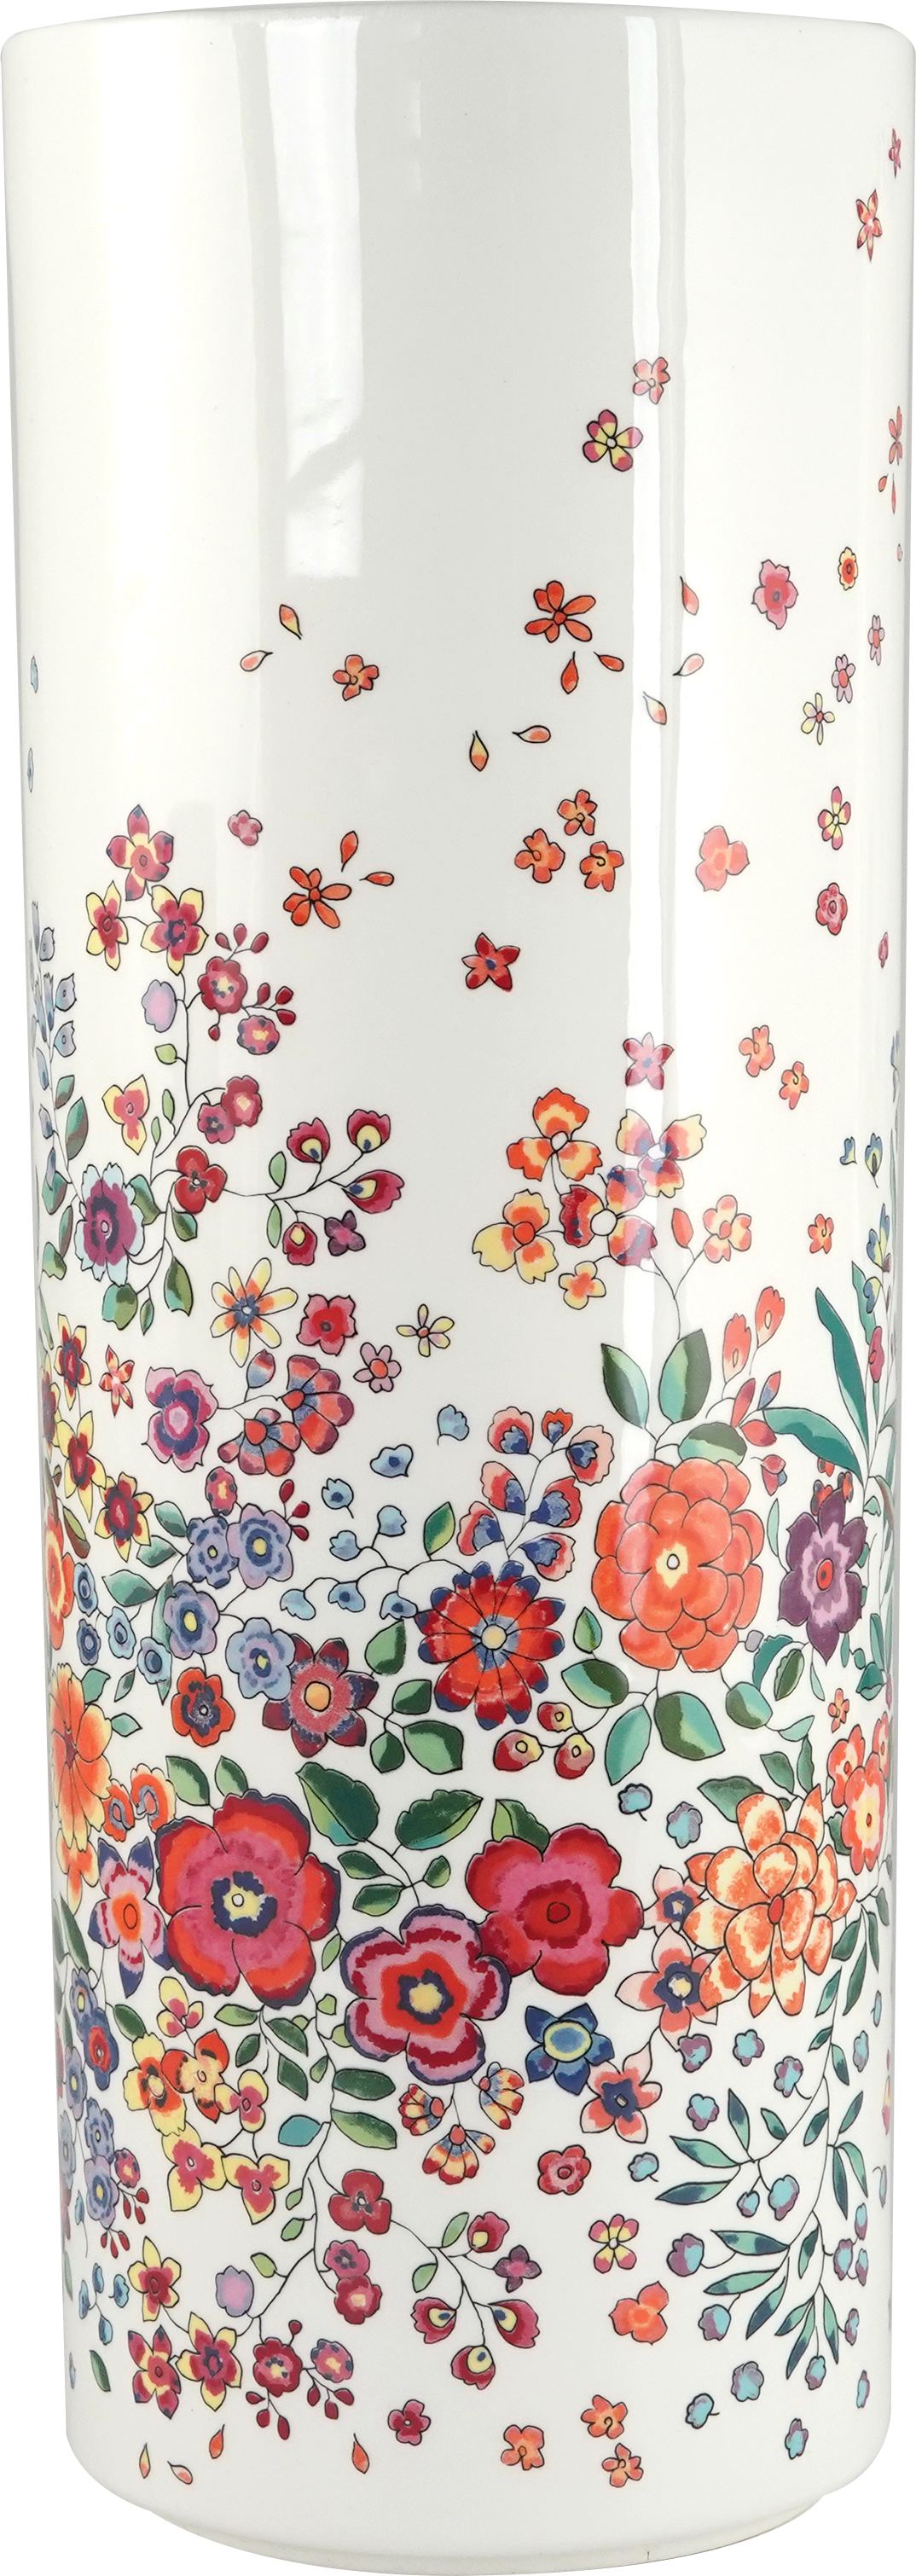 Large Cylinder Vase, Poesie